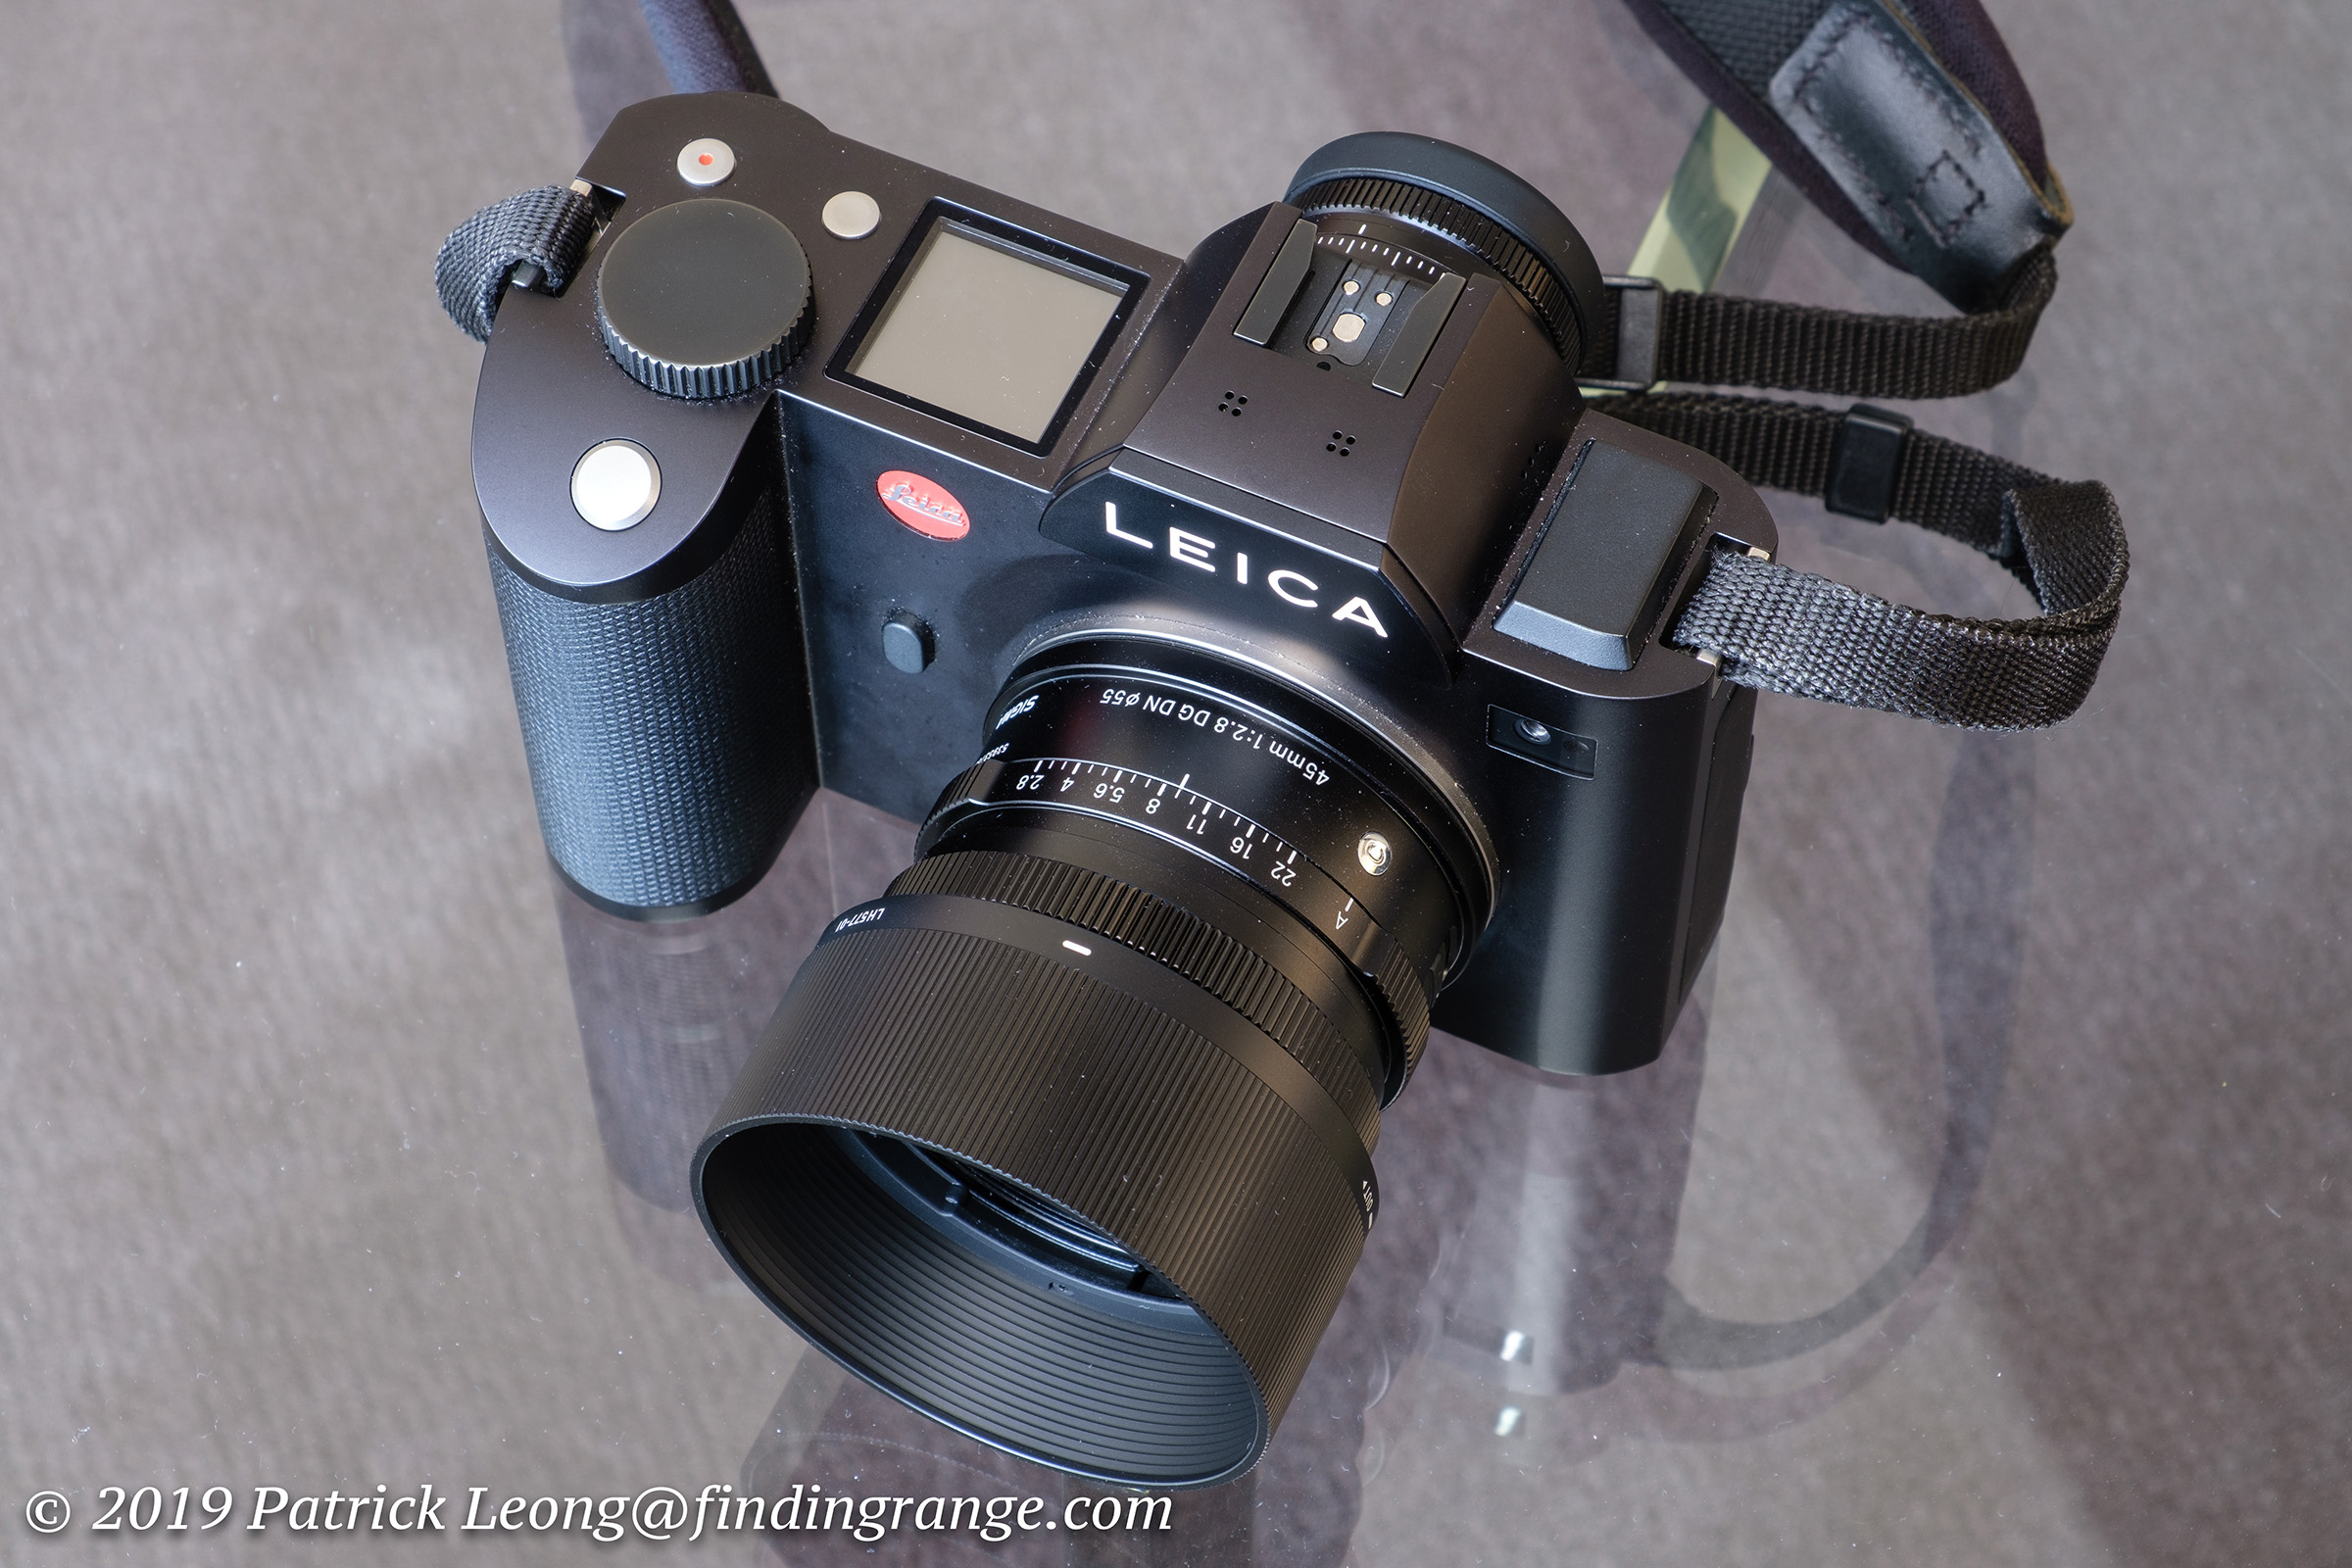 Sigma 45mm f2.8 DG DN Contemporary Lens Review L Mount